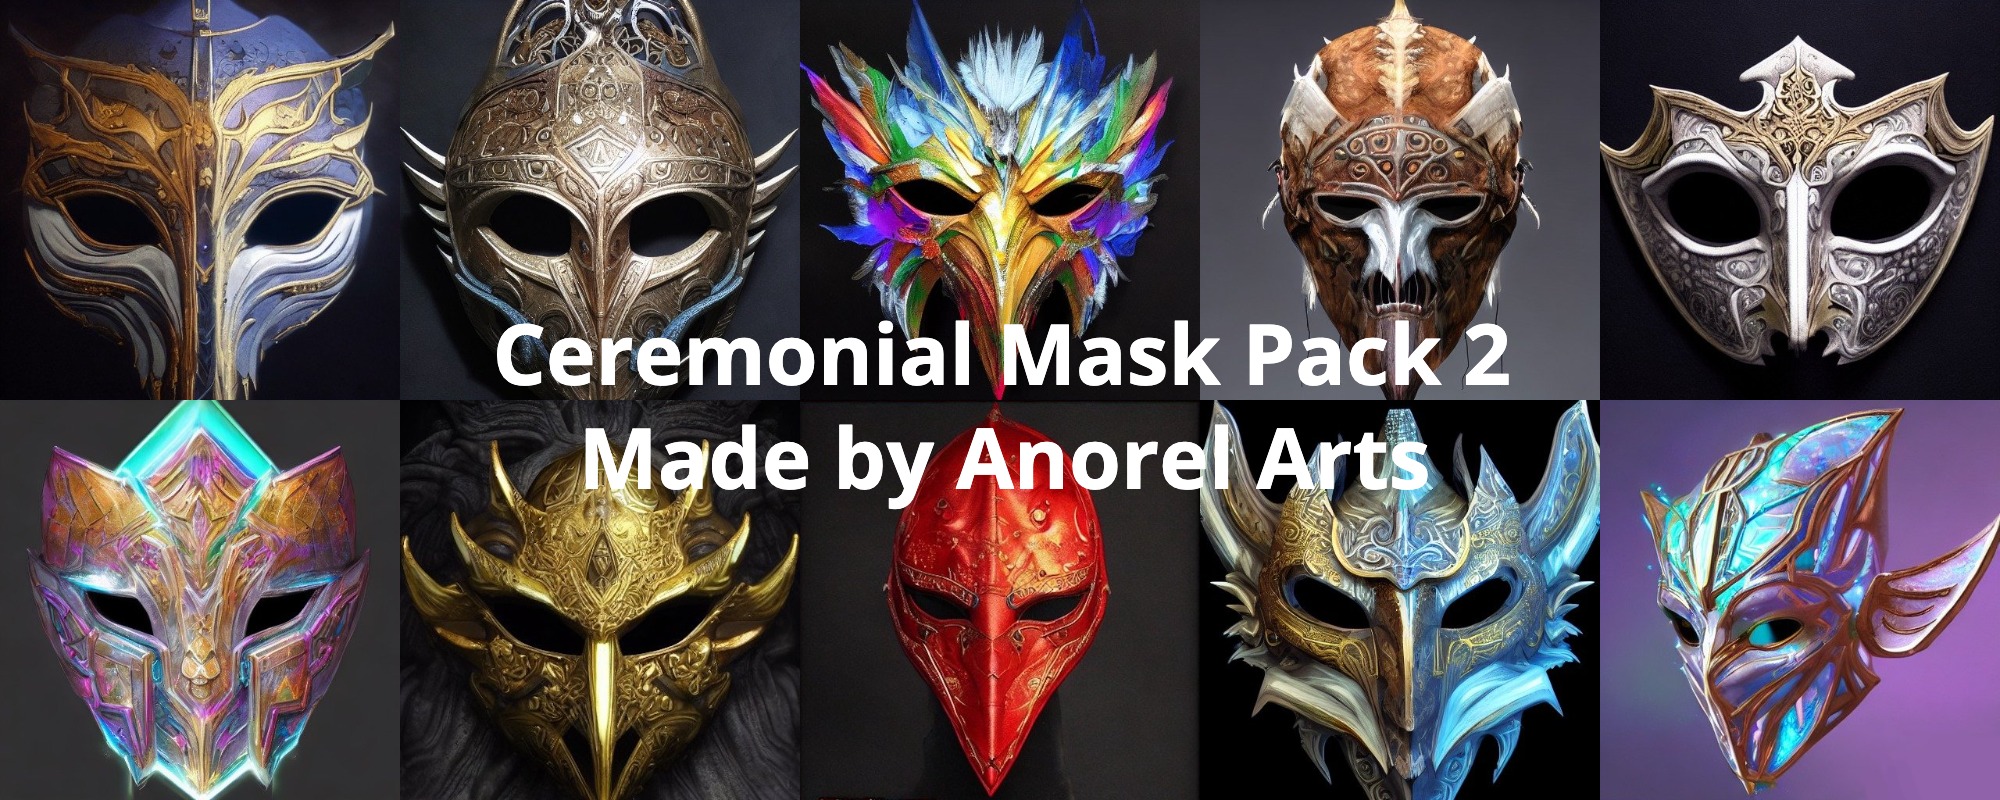 Ceremonial Mask Pack 2